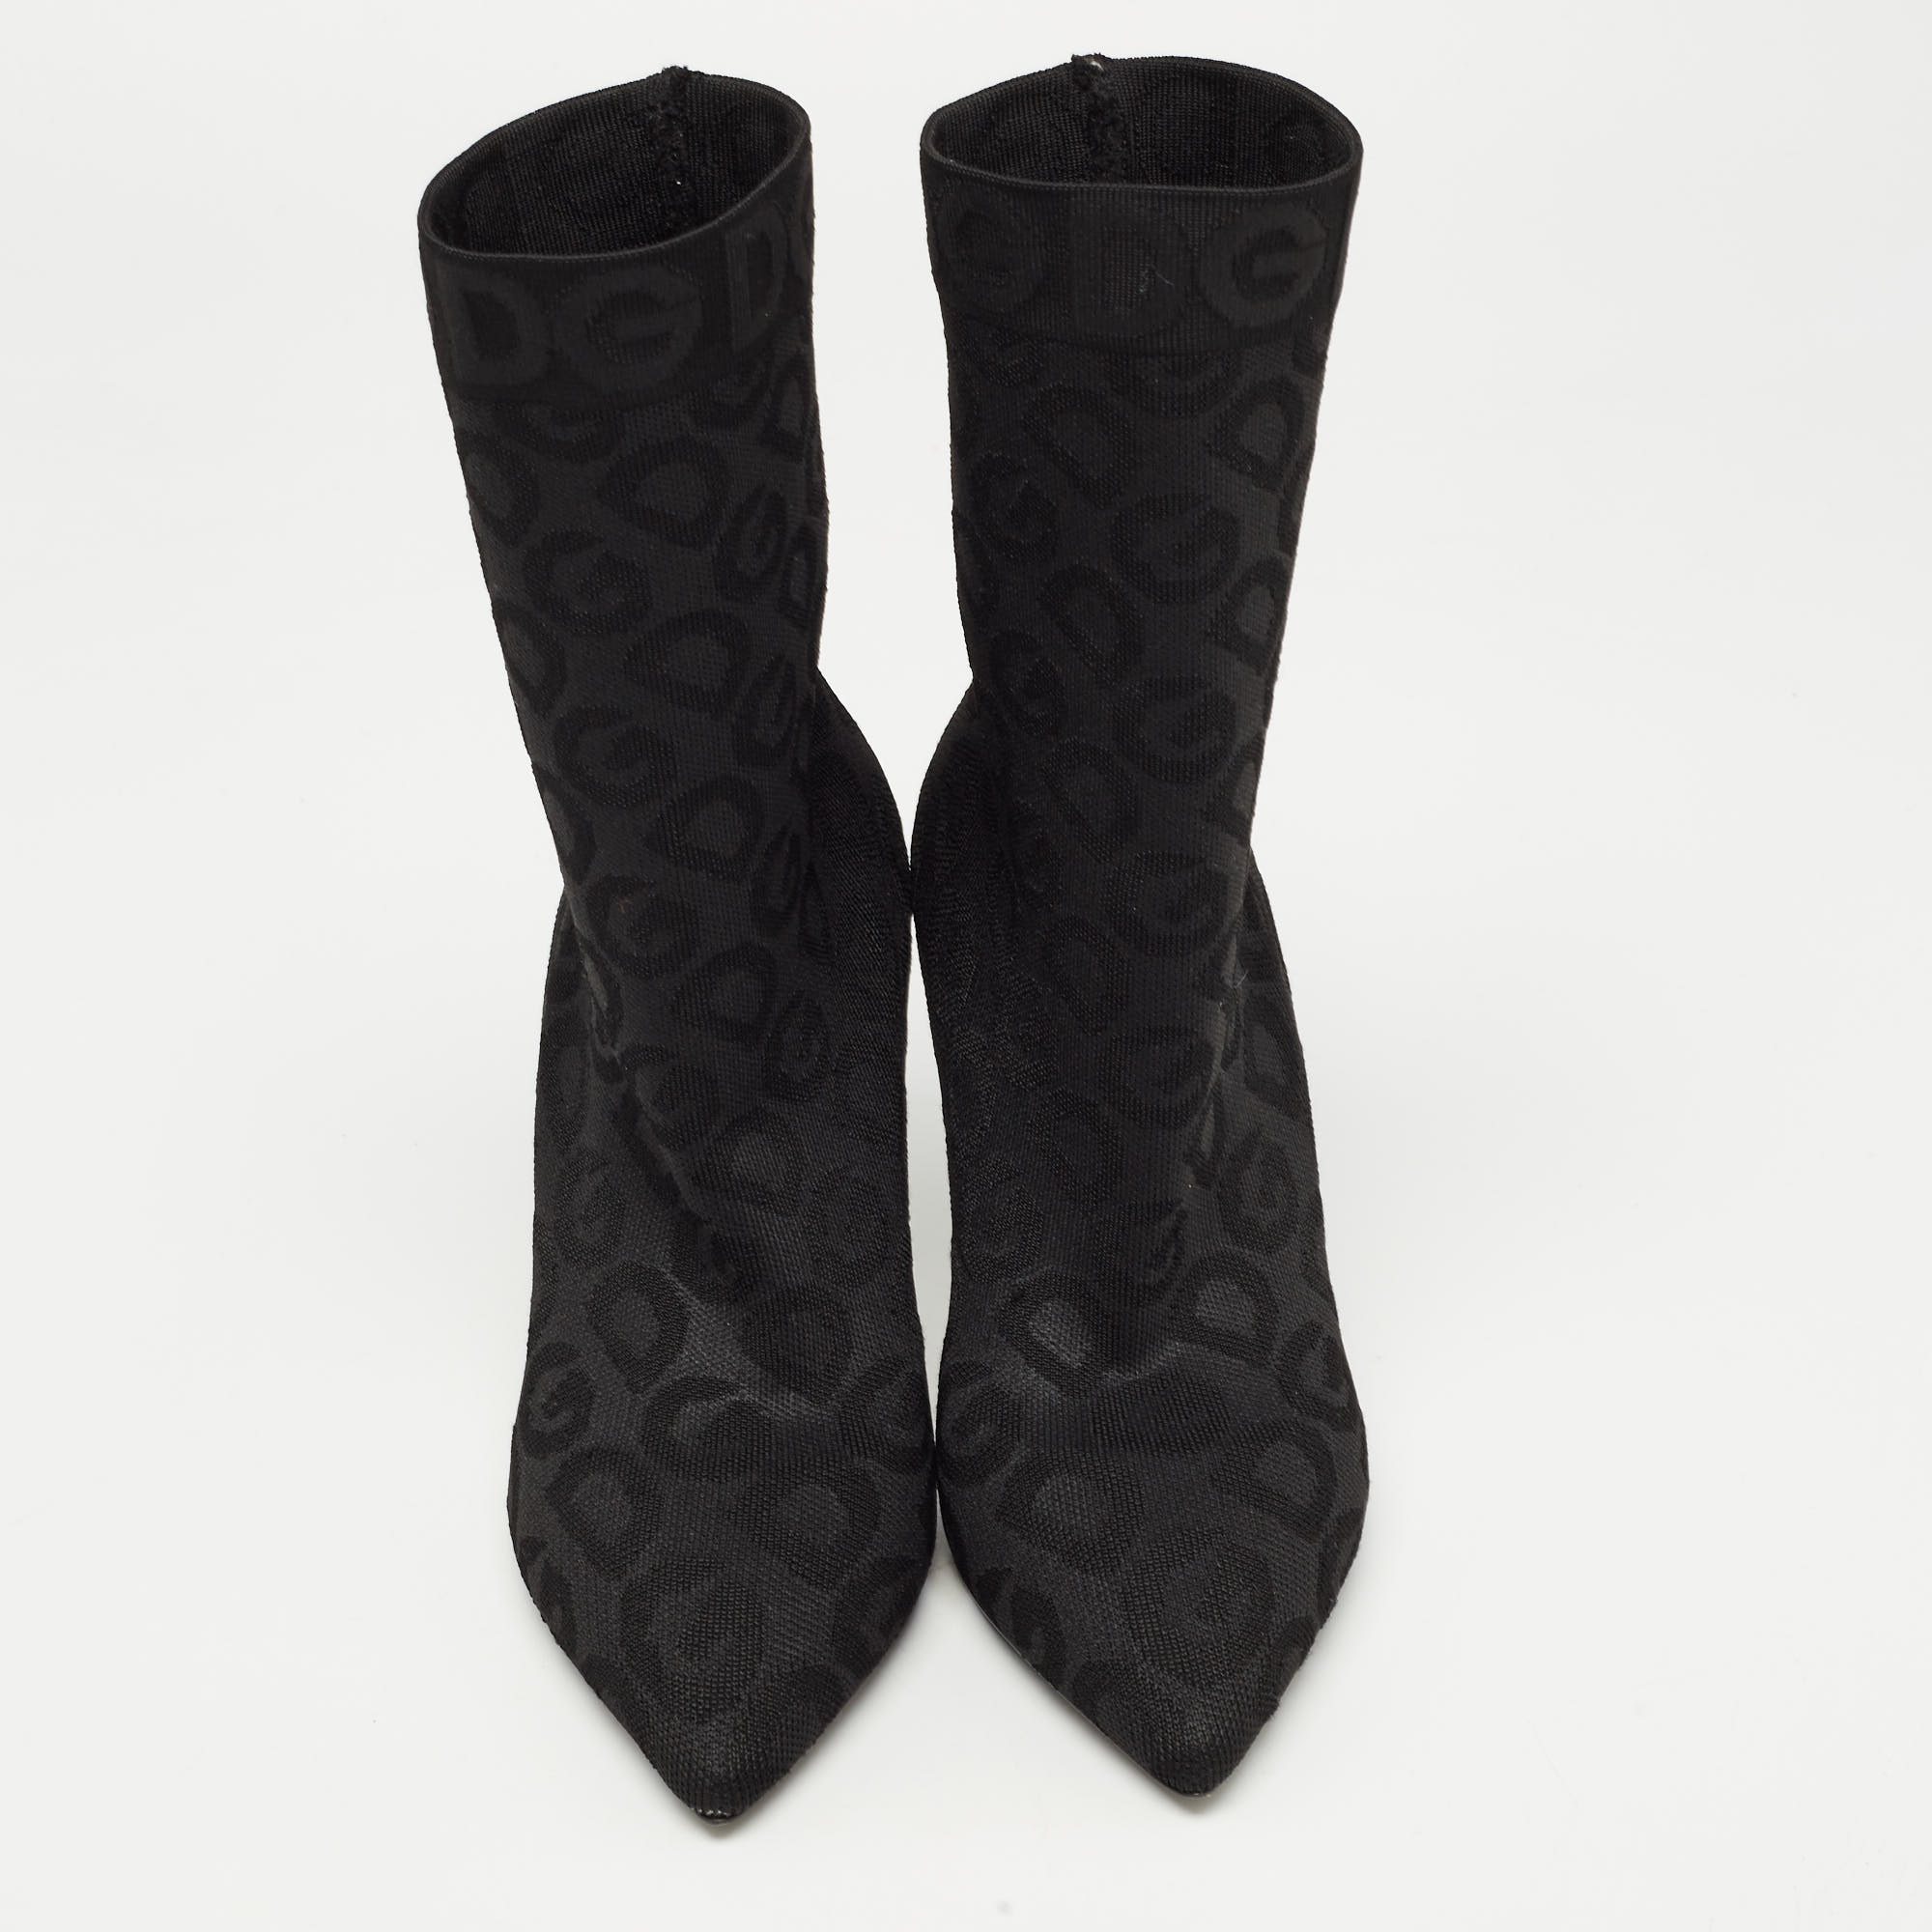 Dolce & Gabbana Black Knit Fabric Stock Boots Size 38